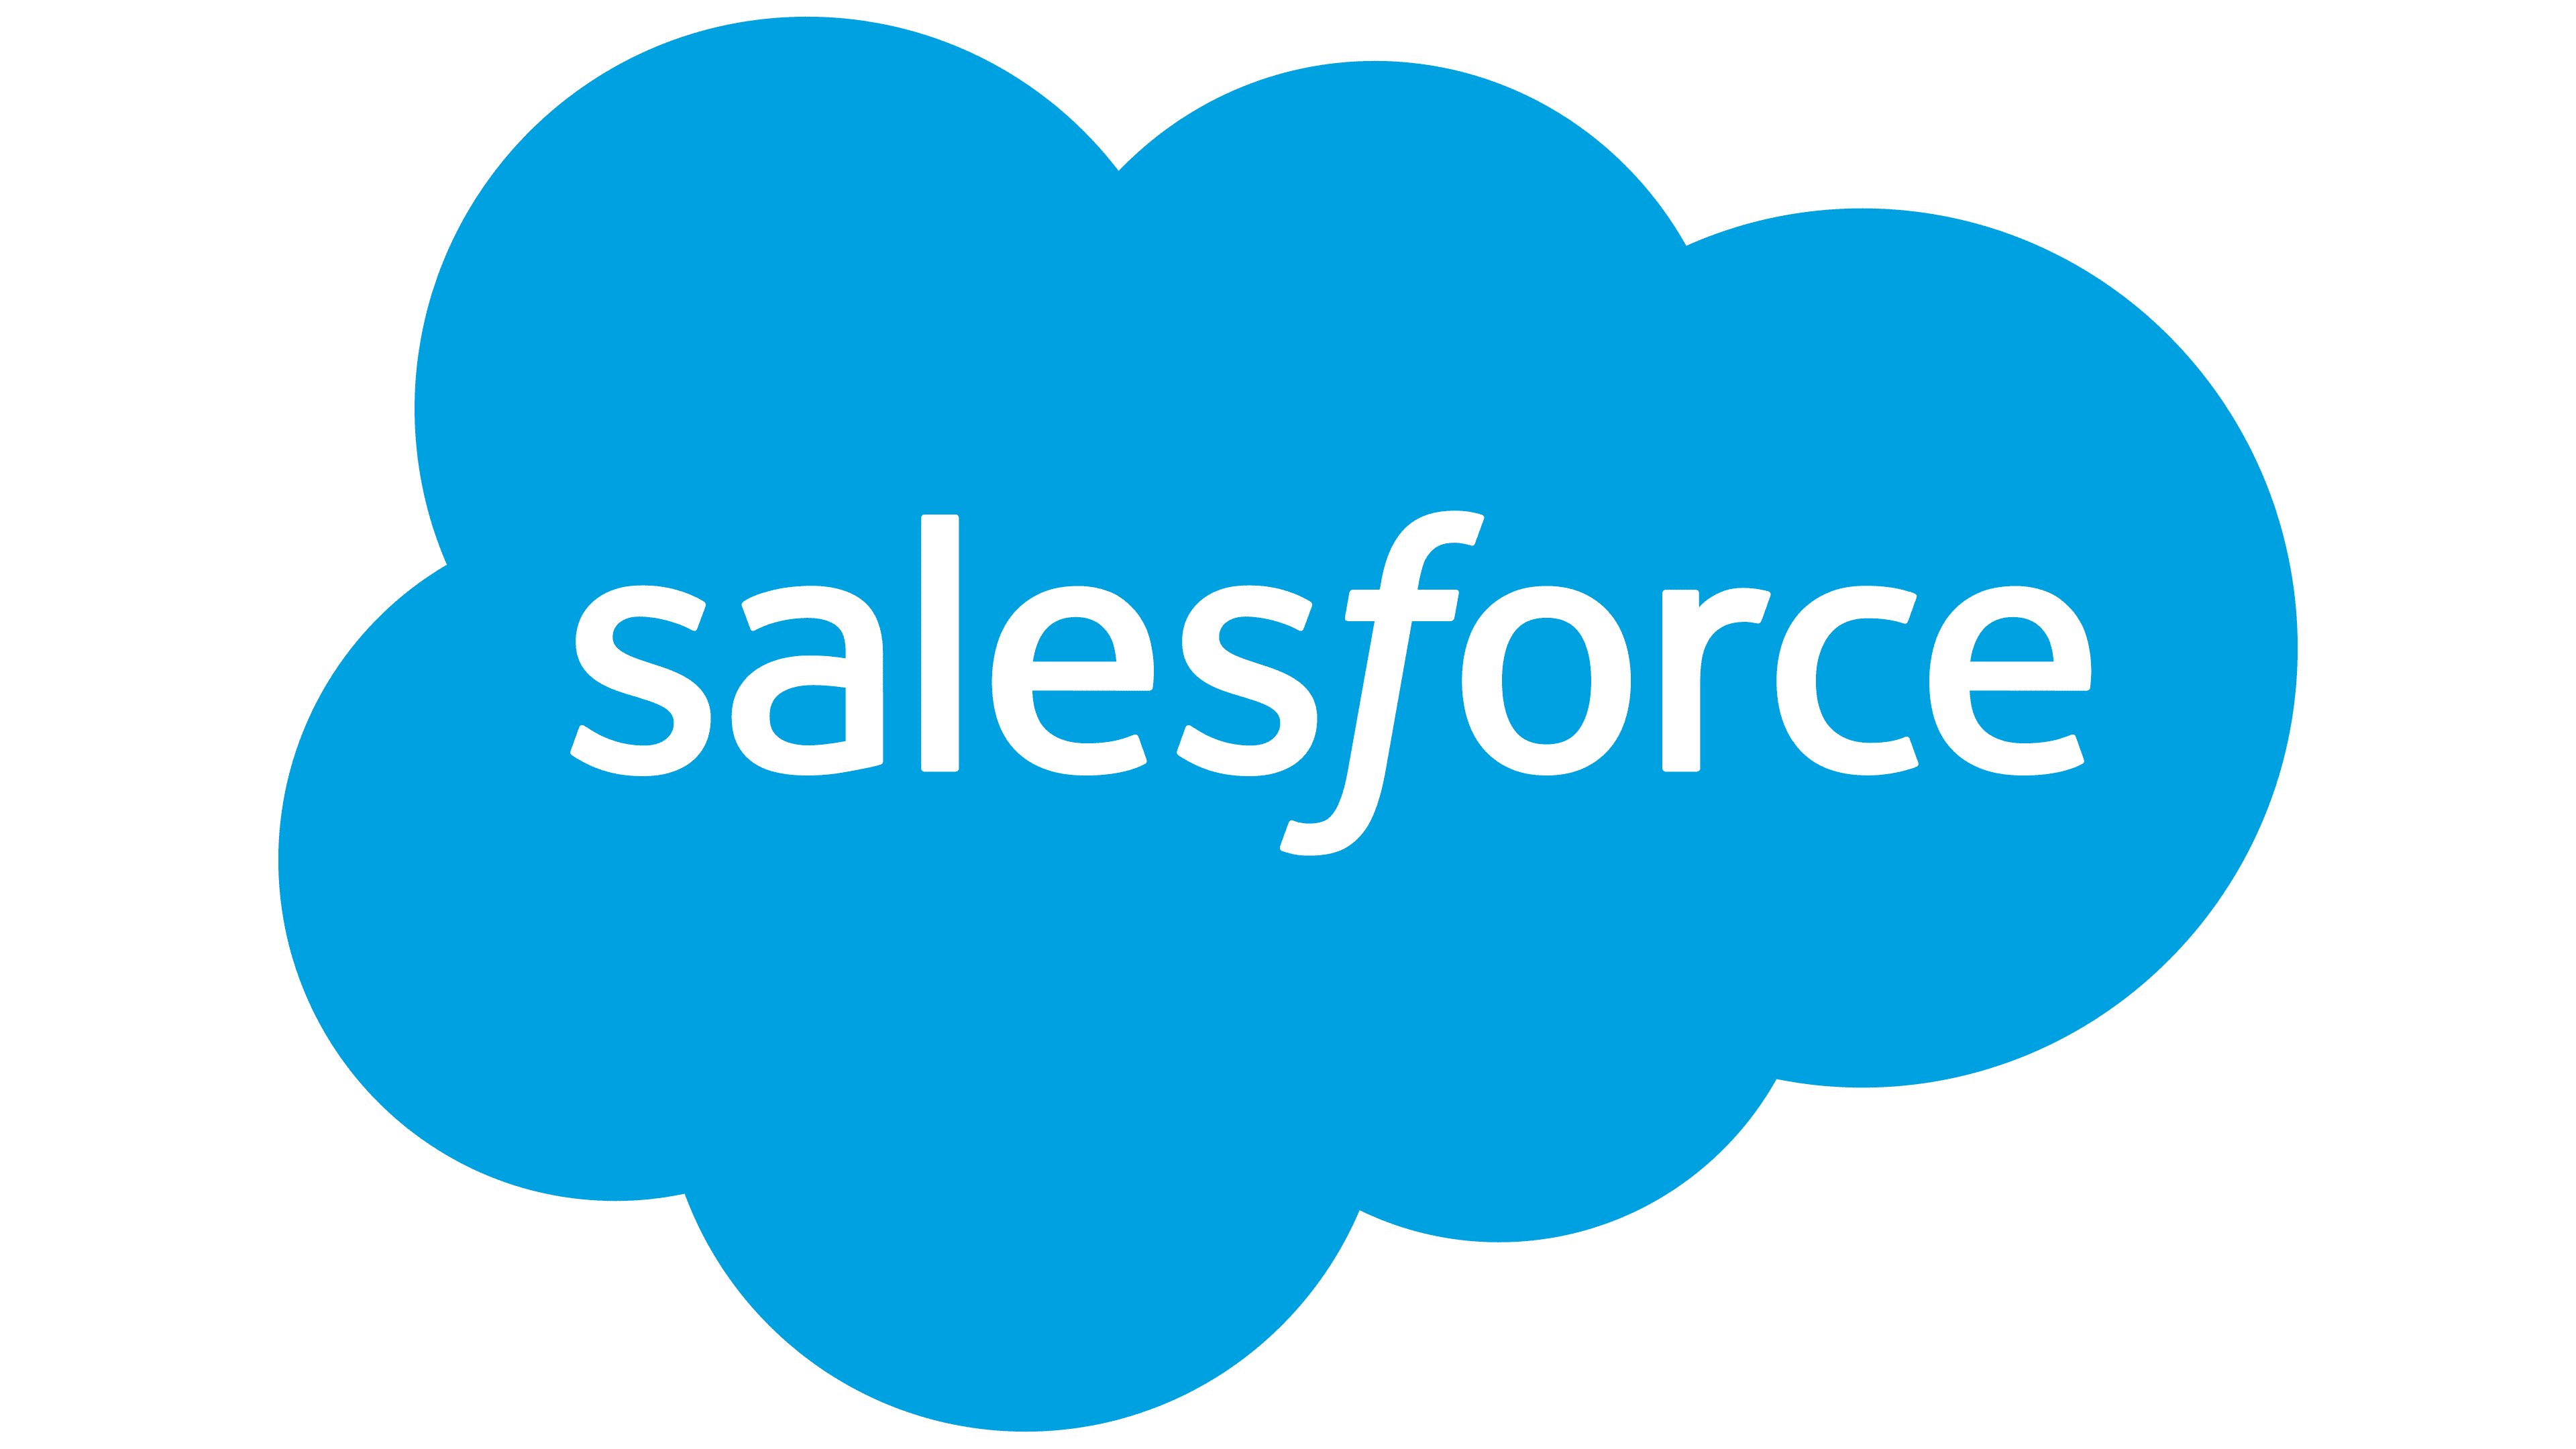 Salesforce_logo_PNG1.png